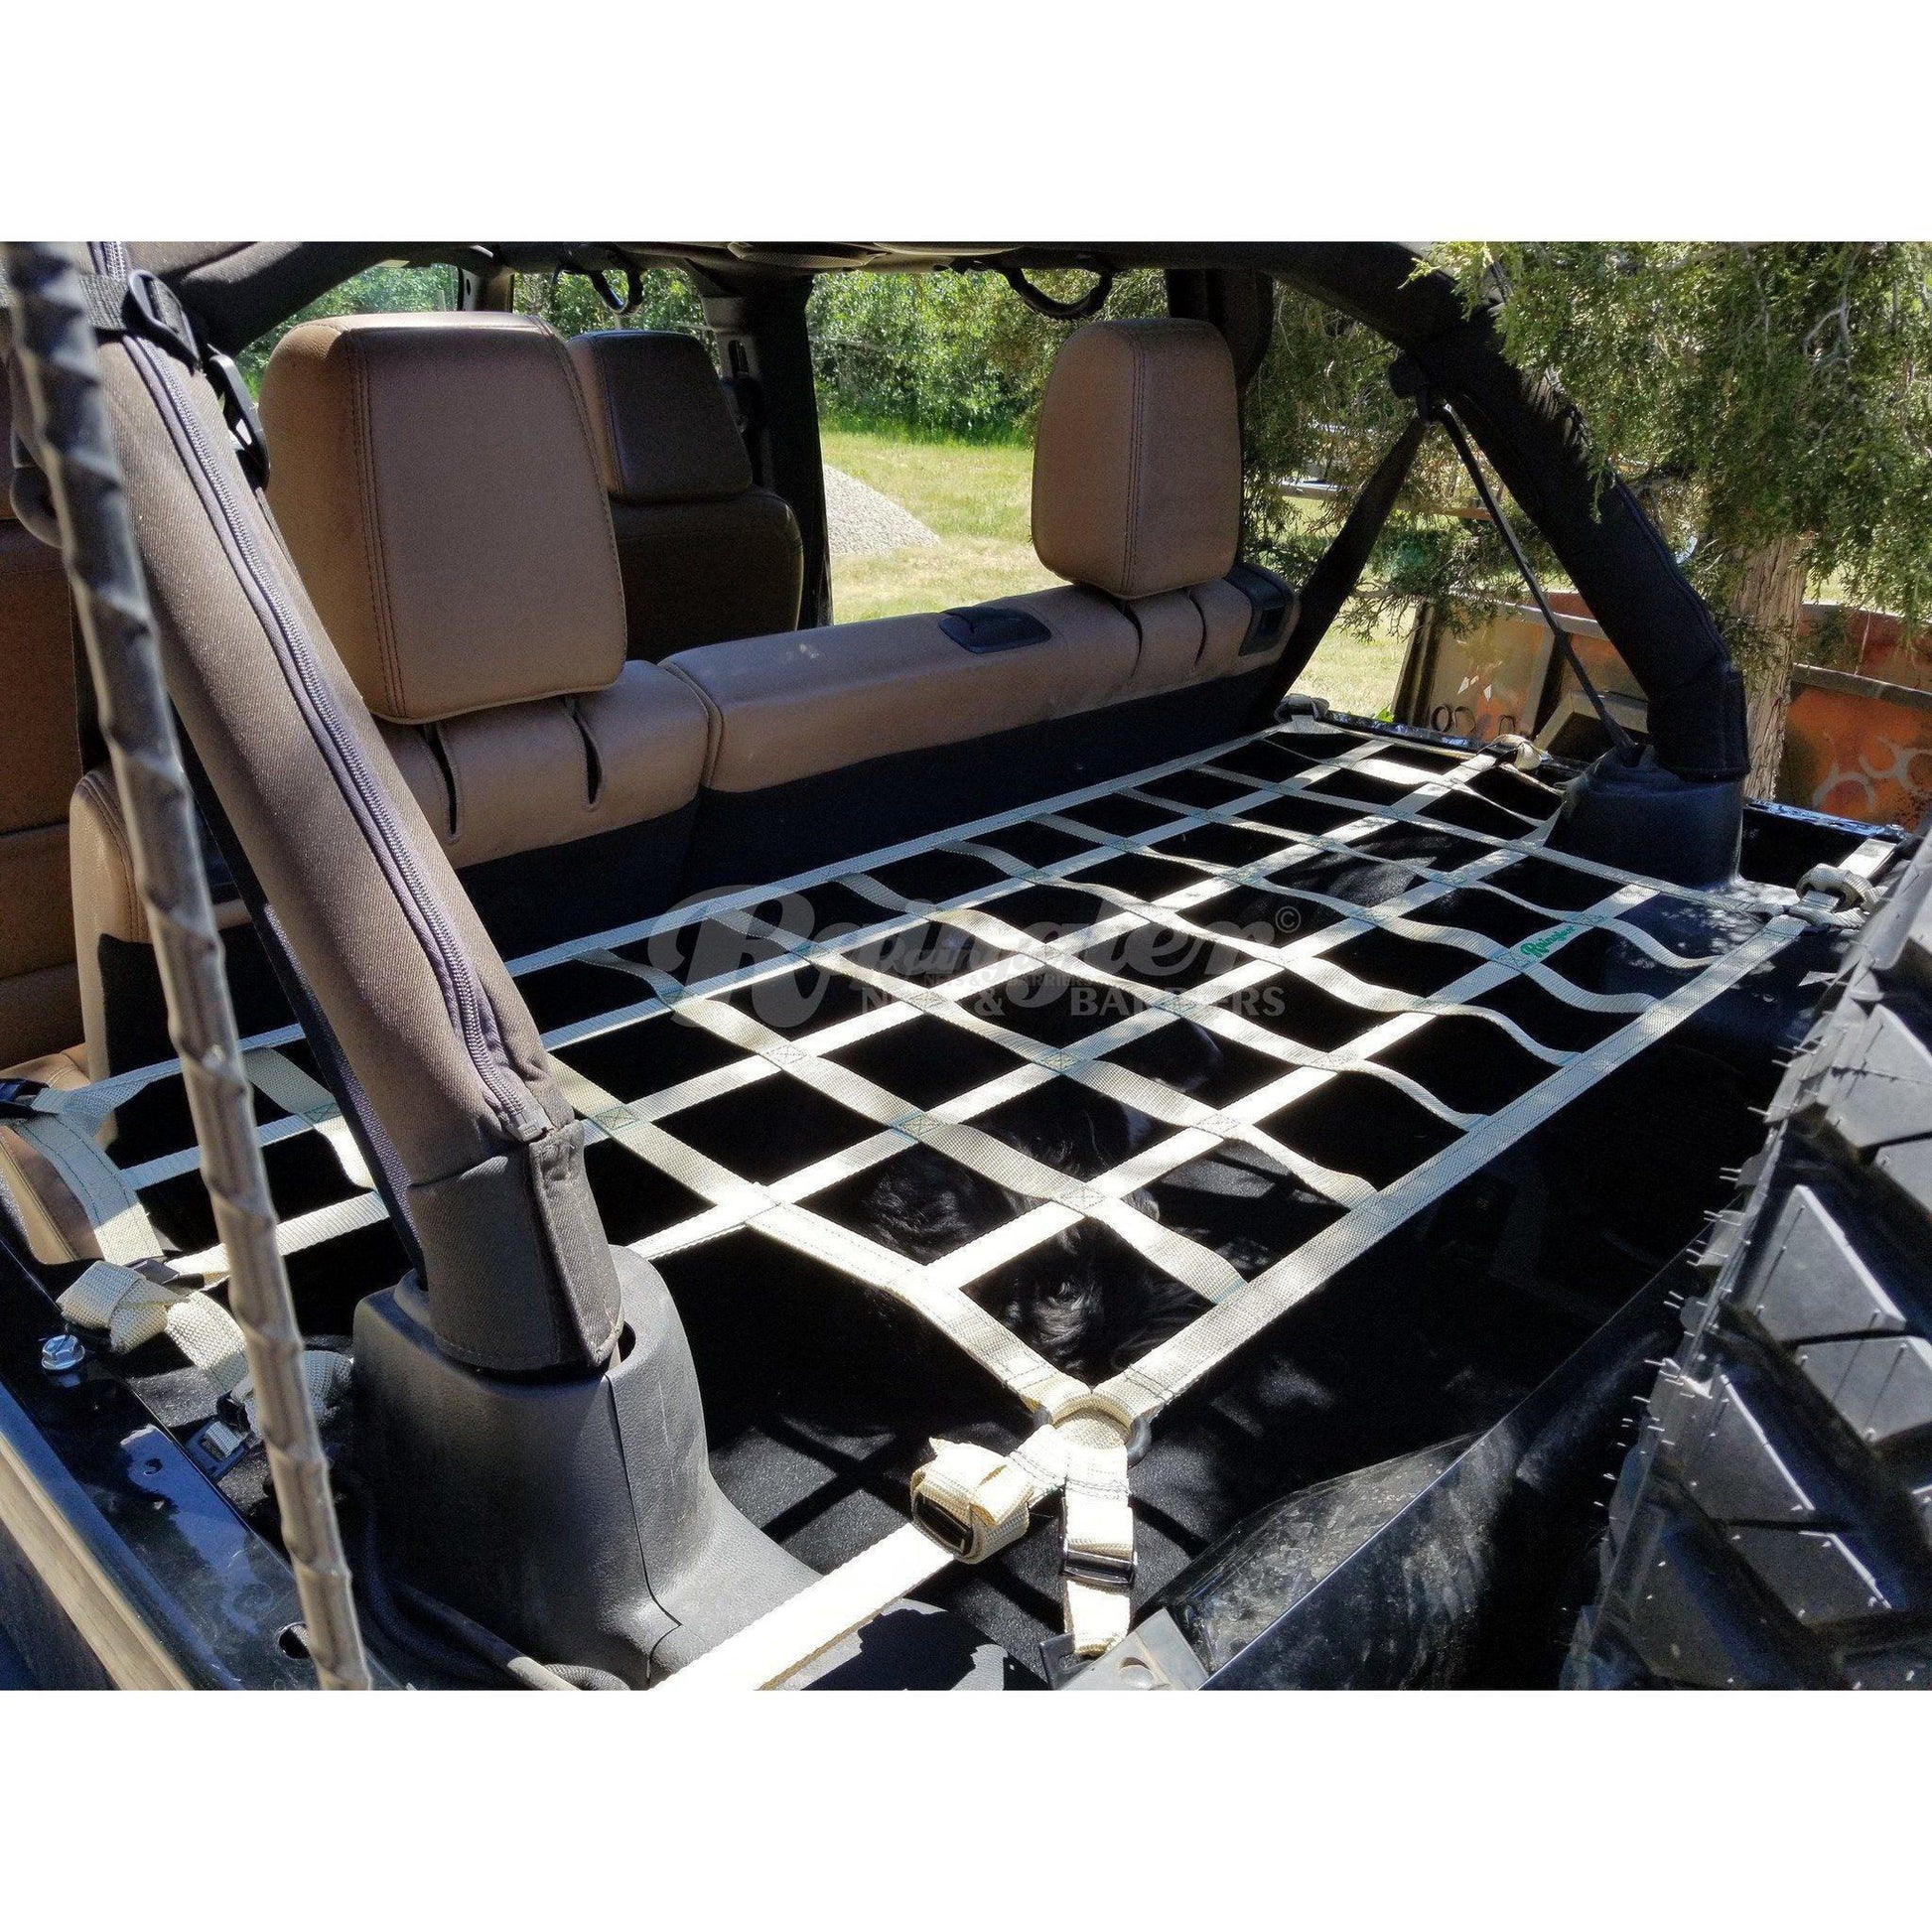 BLEM 2007 - 2018 Jeep Wrangler Unlimited JKU 4 Door Cargo Area Containment and Shelf Net